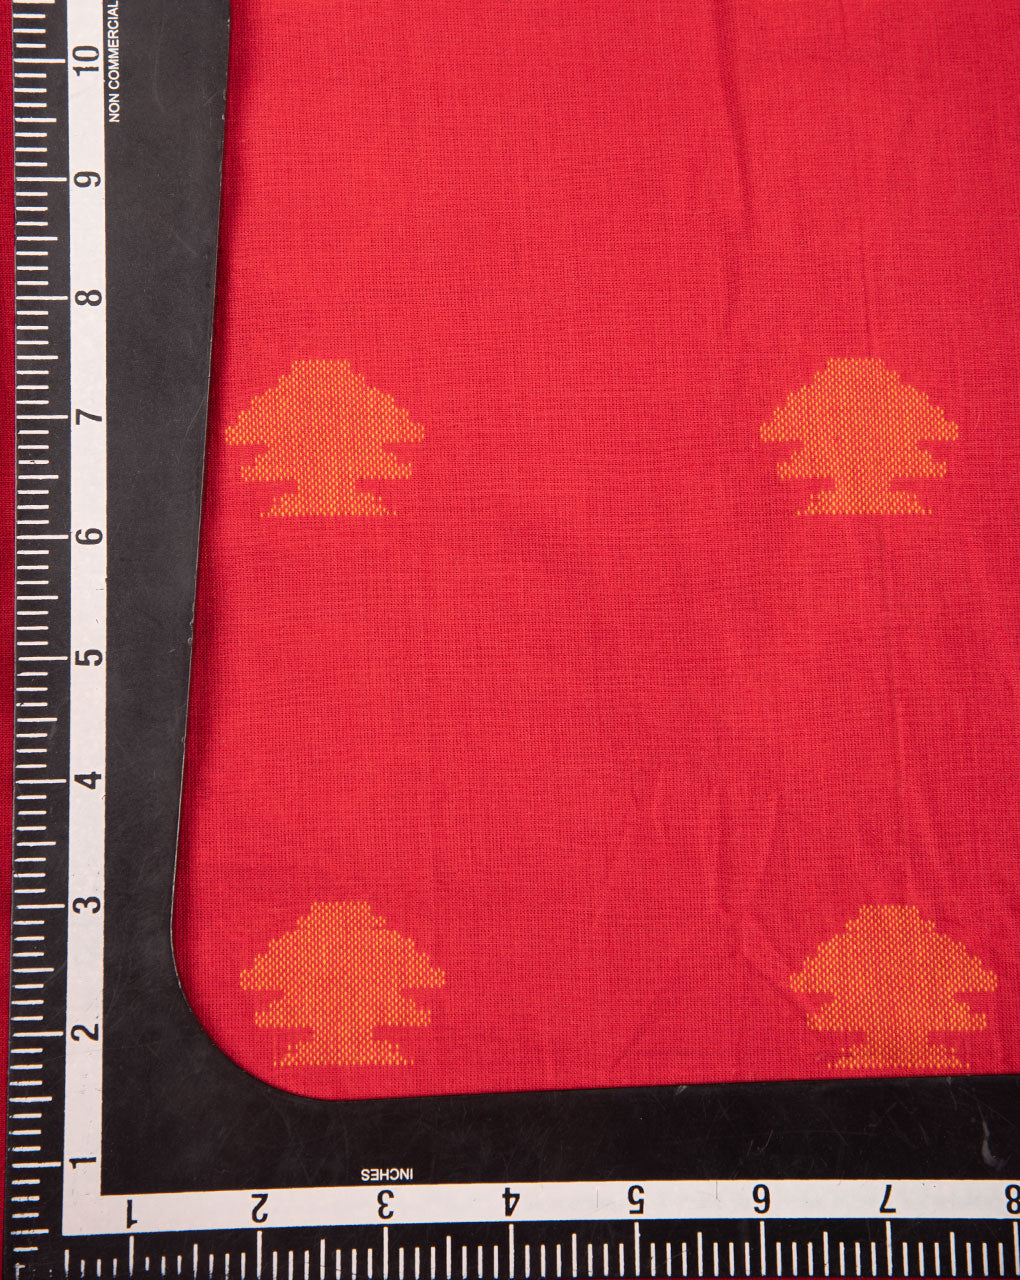 Geometric Woven Jacquard Loom Textured Cotton Fabric - Fabriclore.com